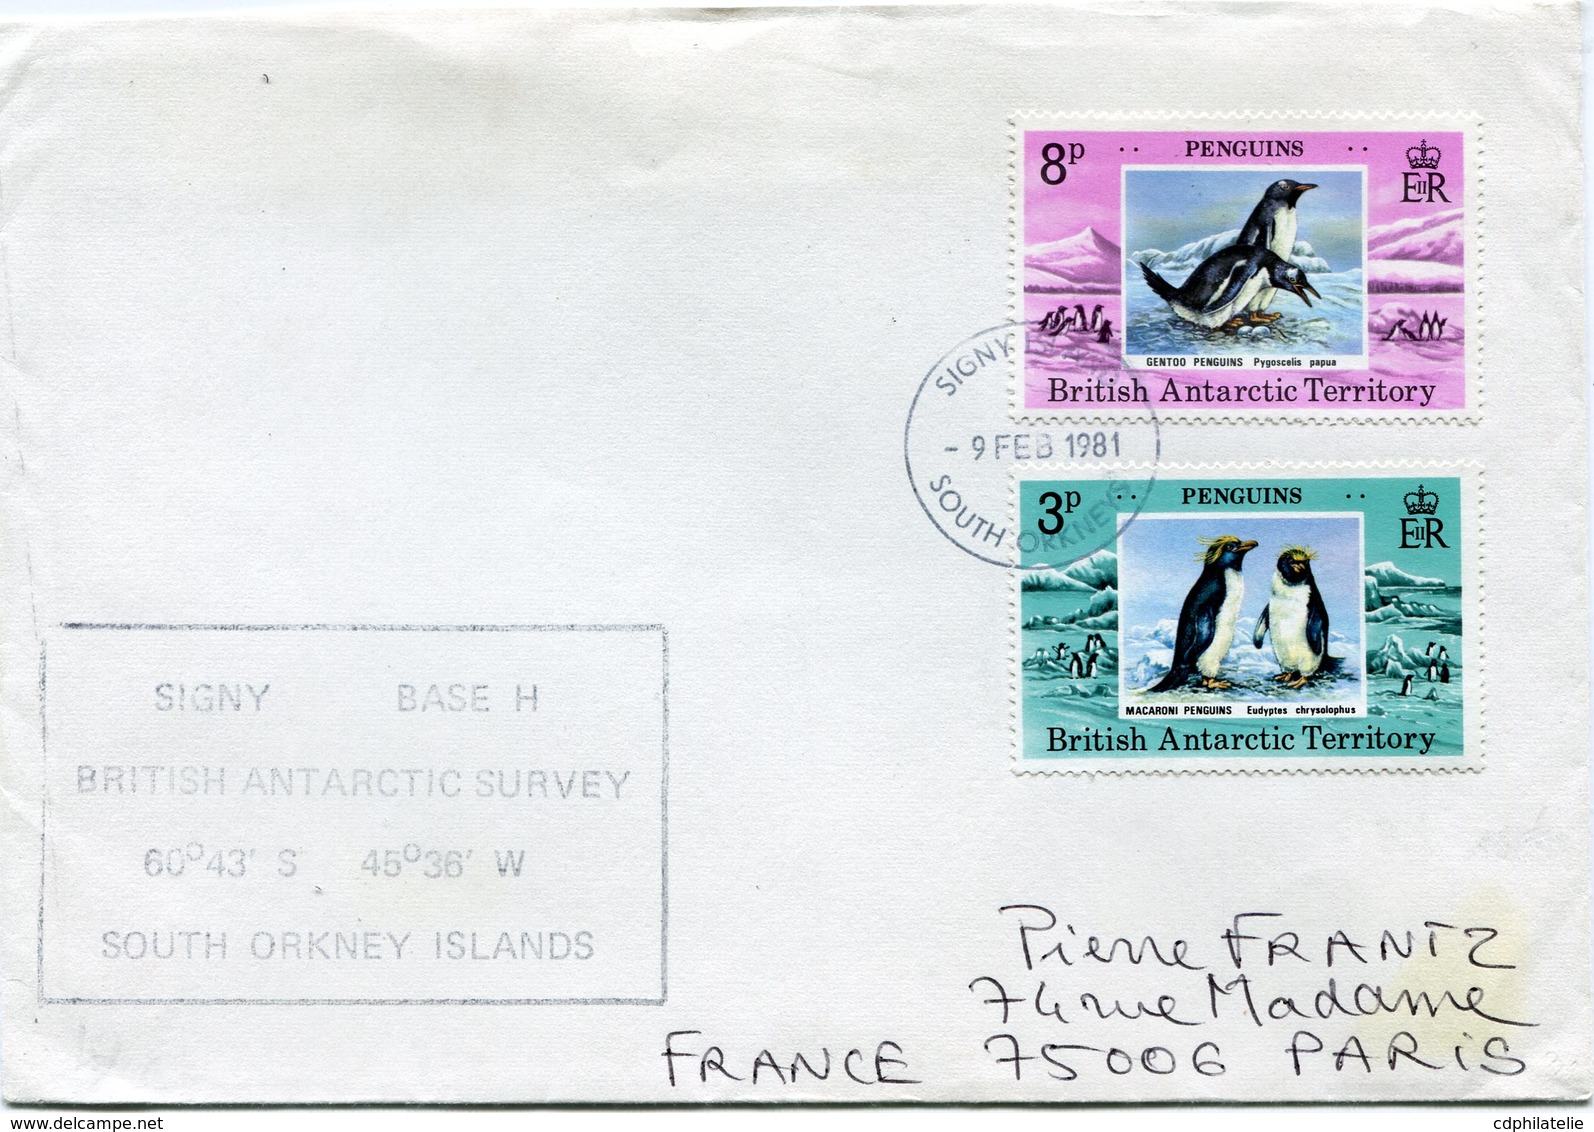 B. A. T. LETTRE DEPART SIGNY ISLAND 9 FEB 1981 SOUTH ORKNEYS POUR LA FRANCE - Lettres & Documents